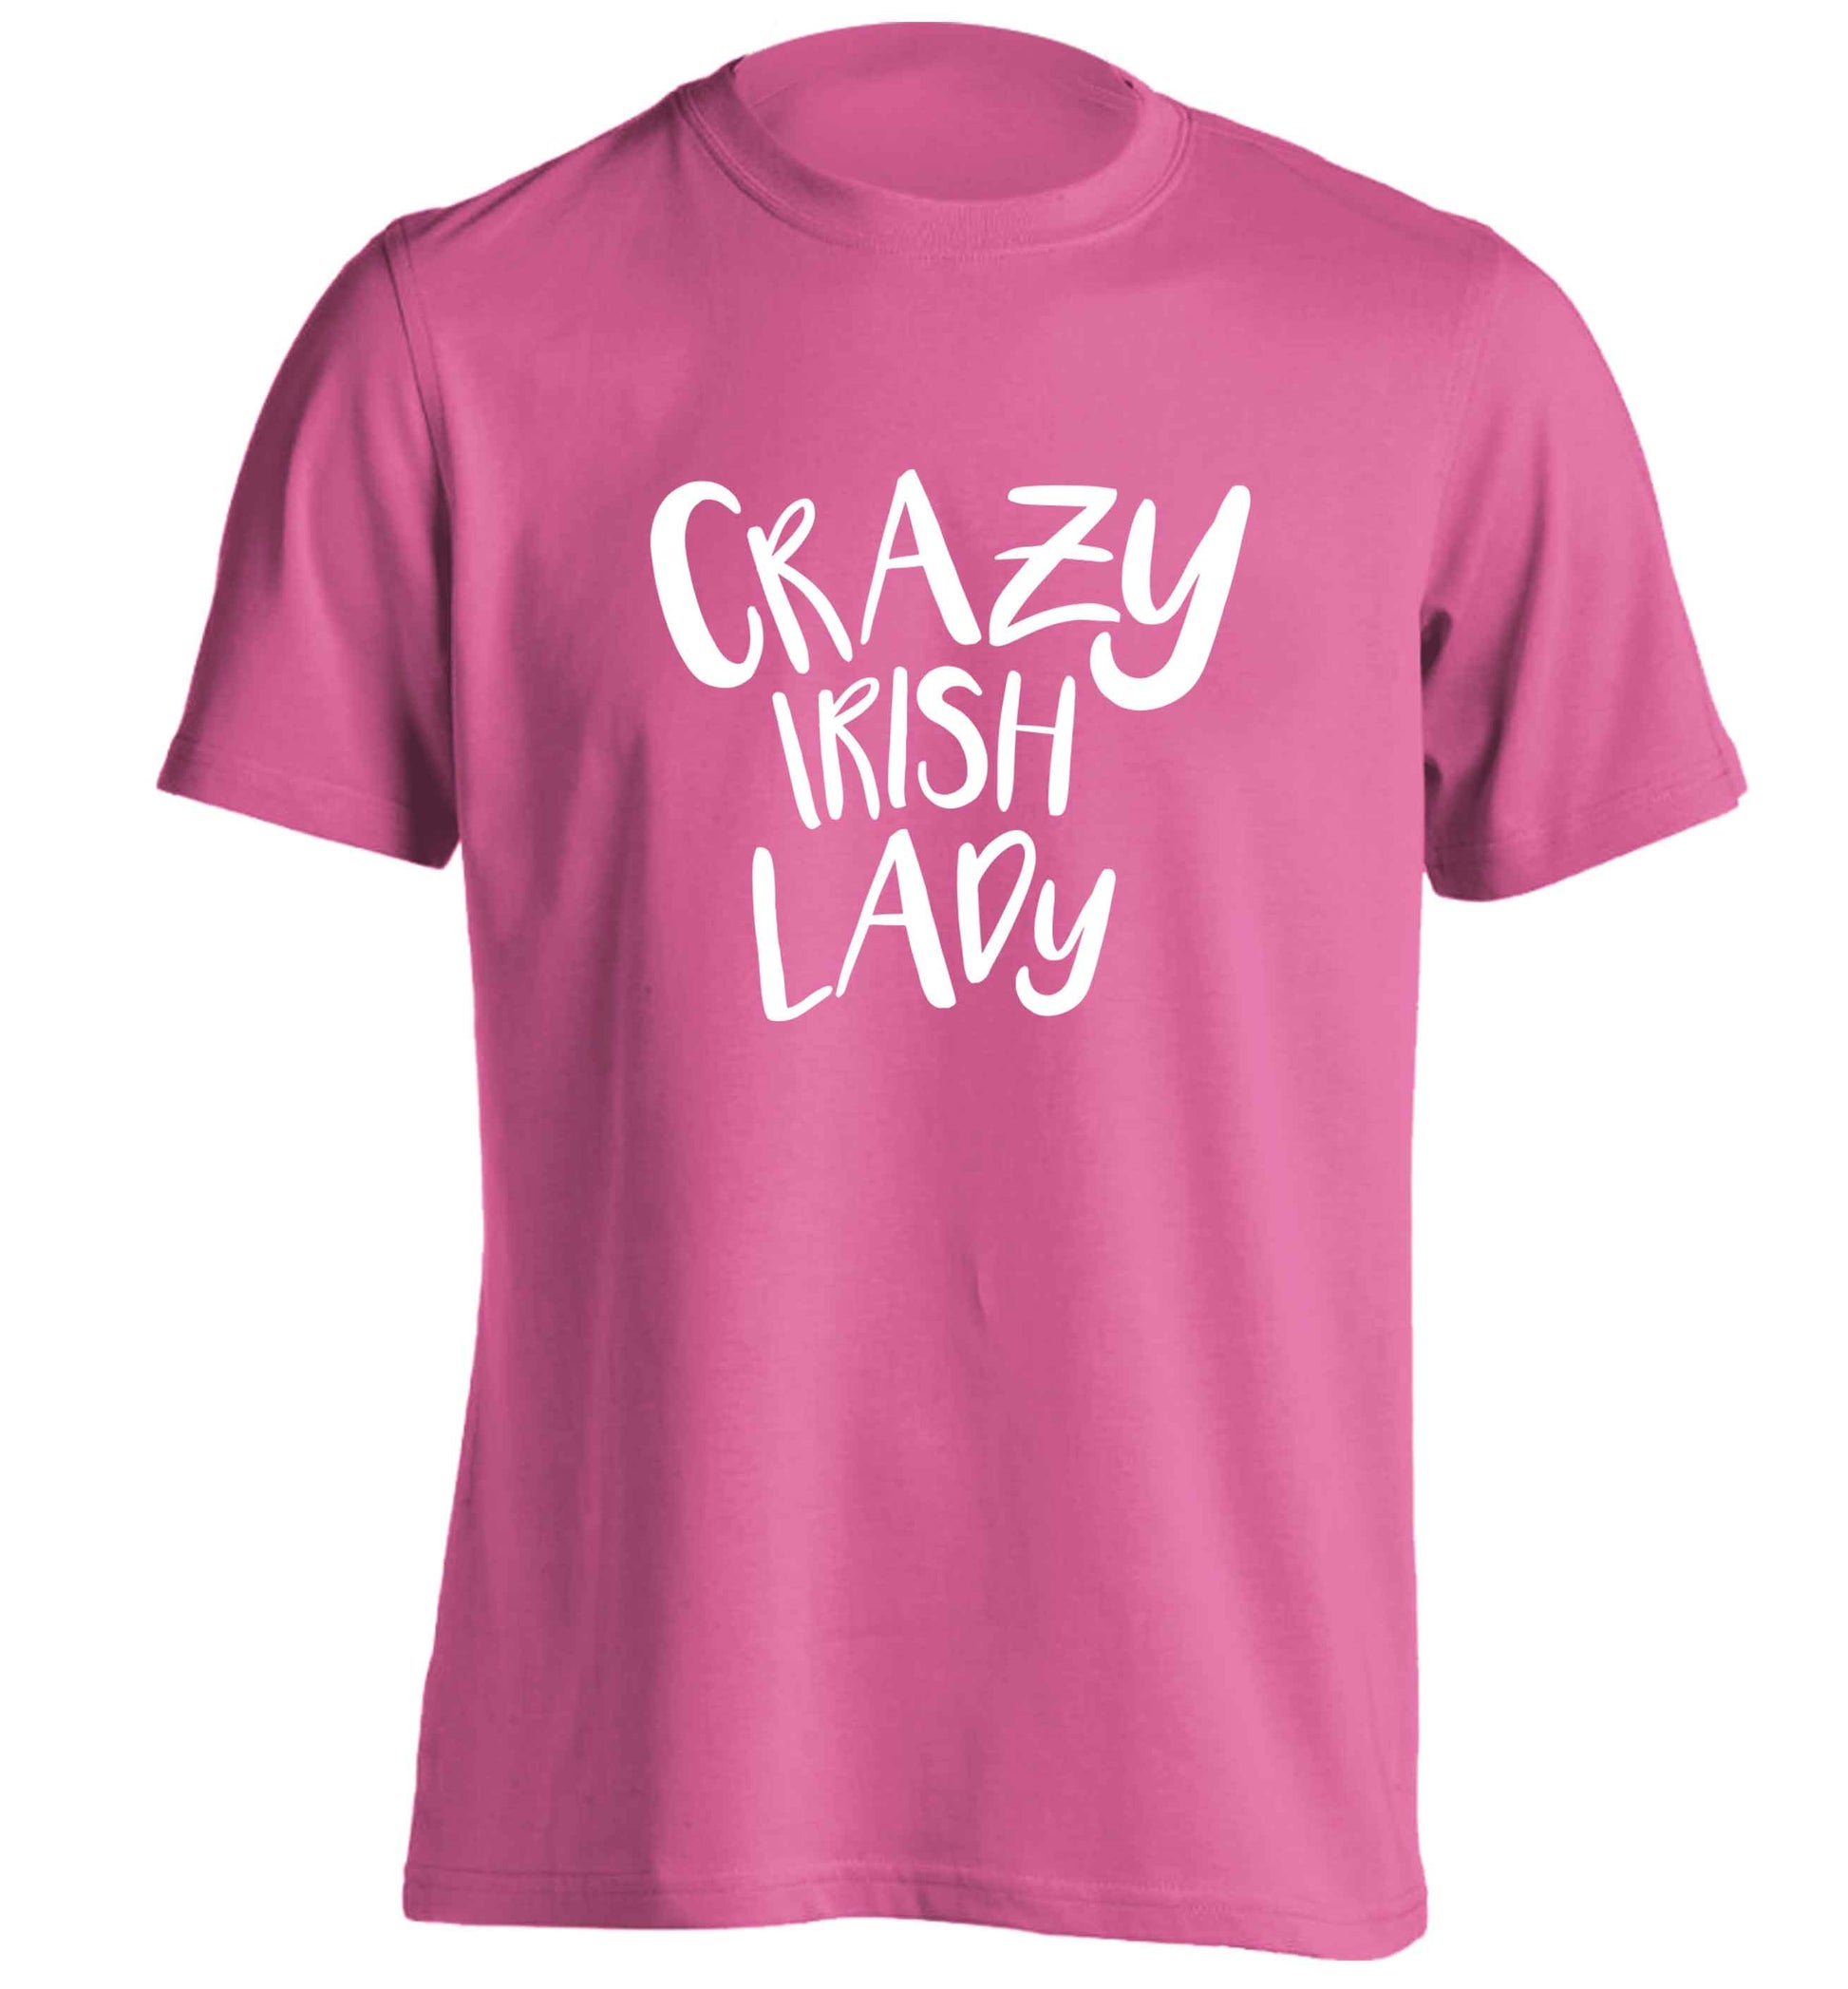 Crazy Irish lady adults unisex pink Tshirt 2XL